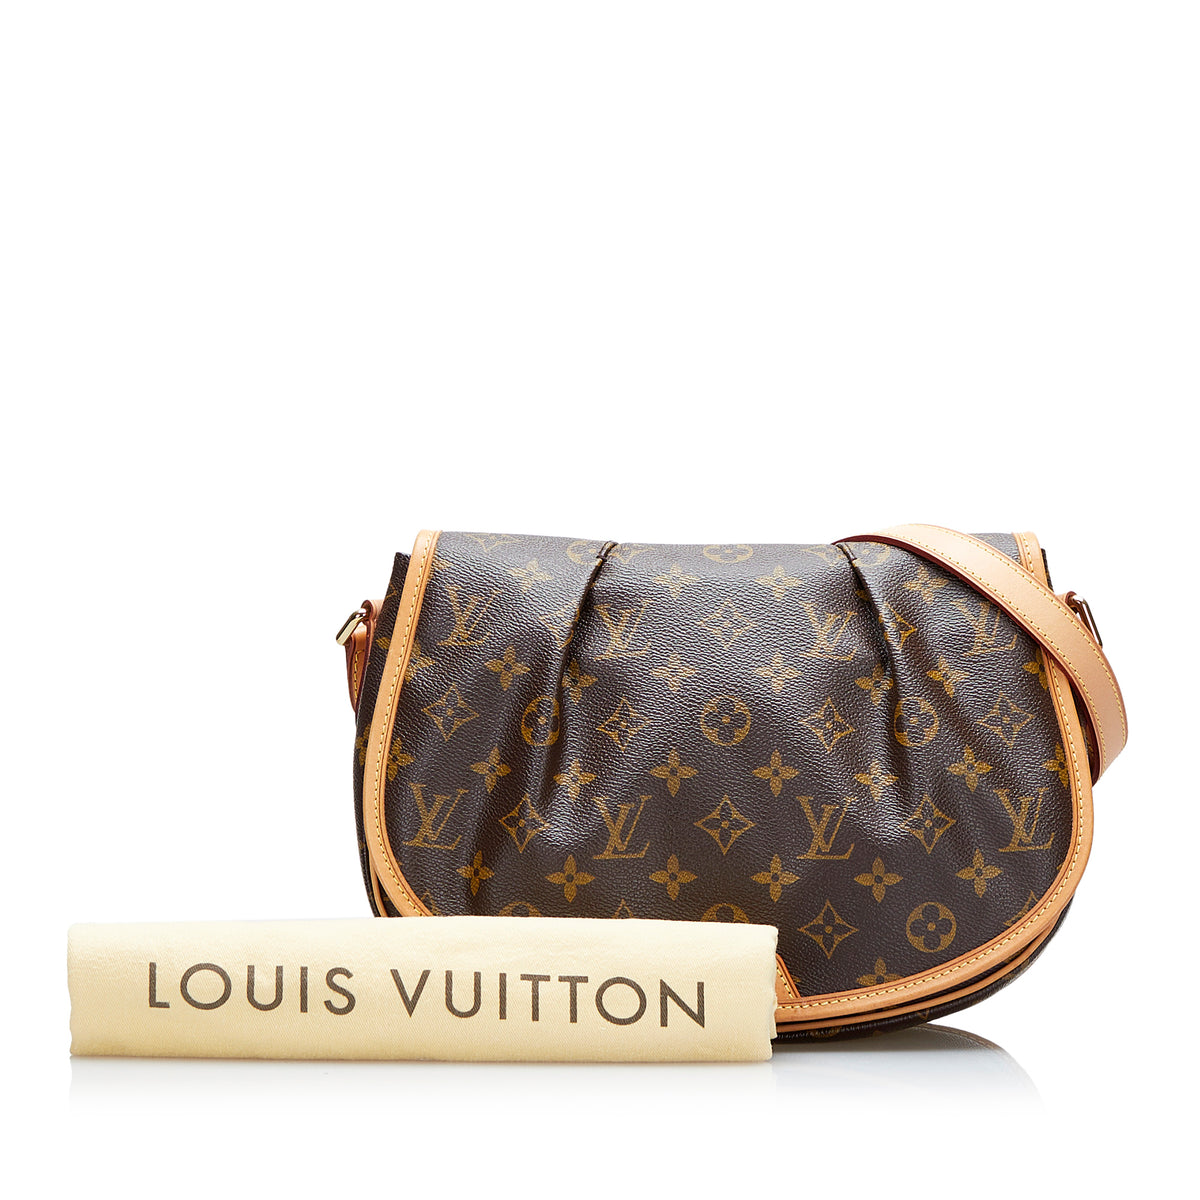 Preloved Louis Vuitton Monogram Menilmontant PM CT3193 080723 – KimmieBBags  LLC